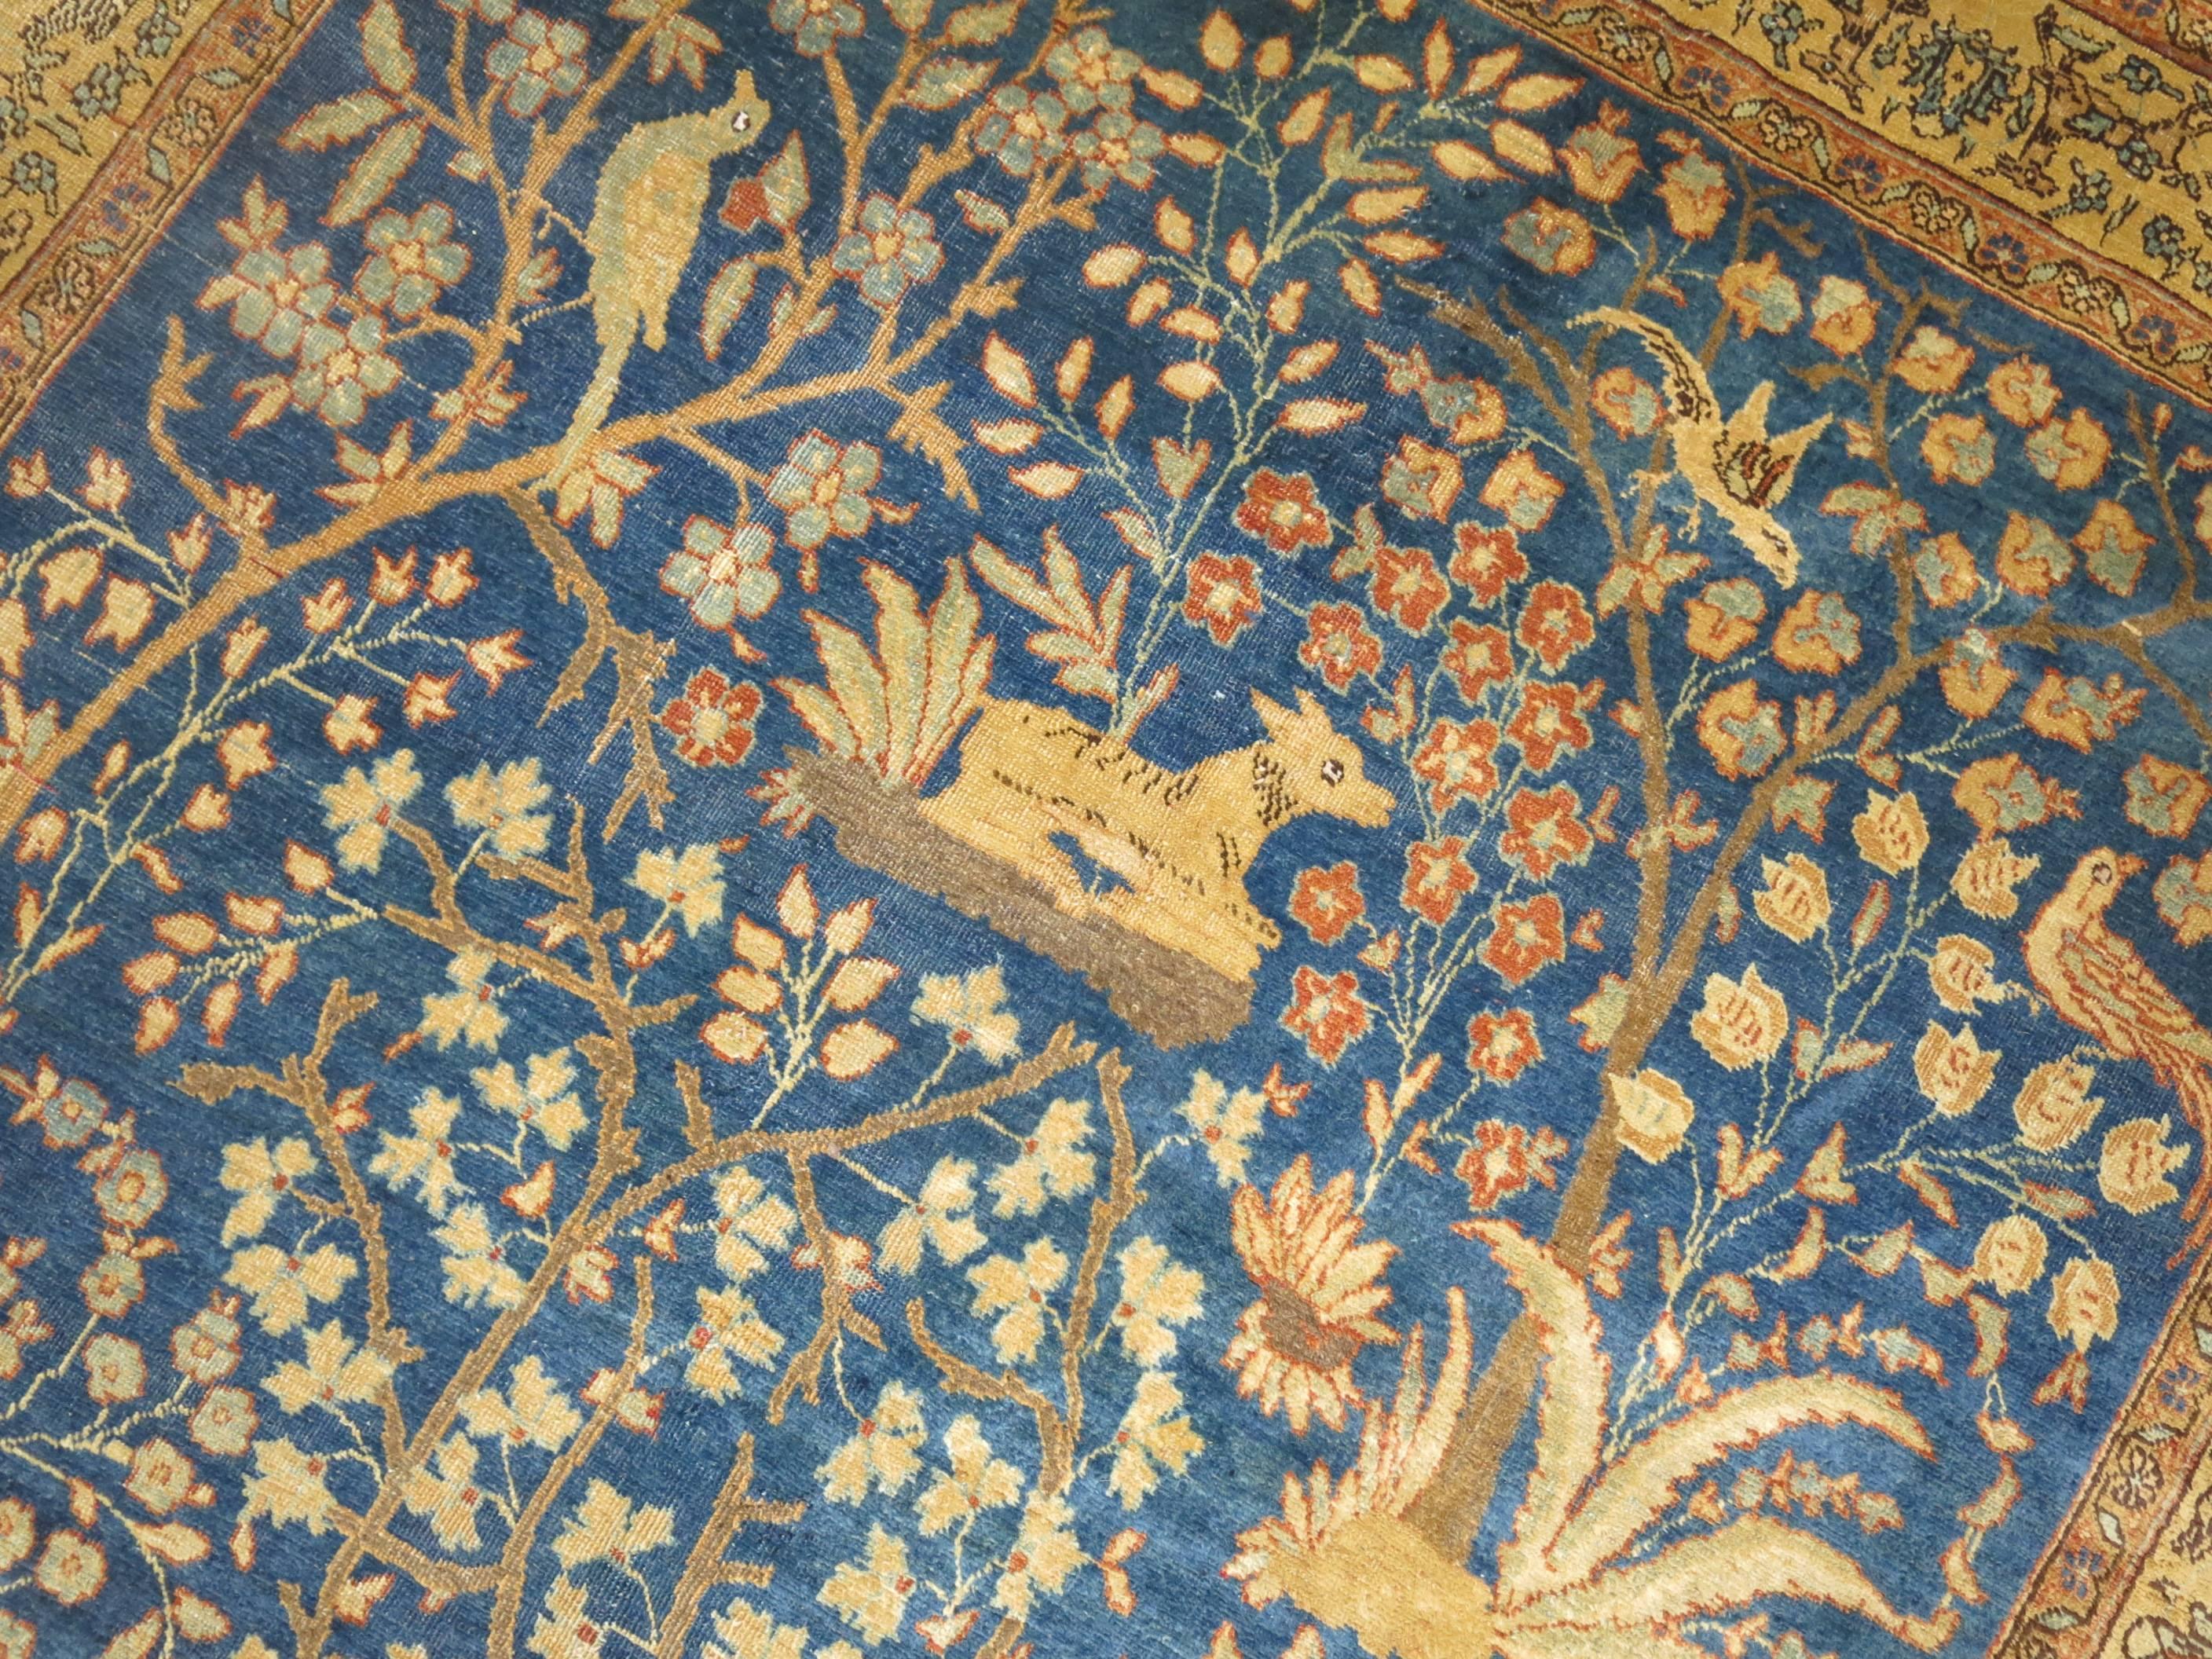 Folk Art Pictorial Antique Persian Tabriz Carpet in Blue